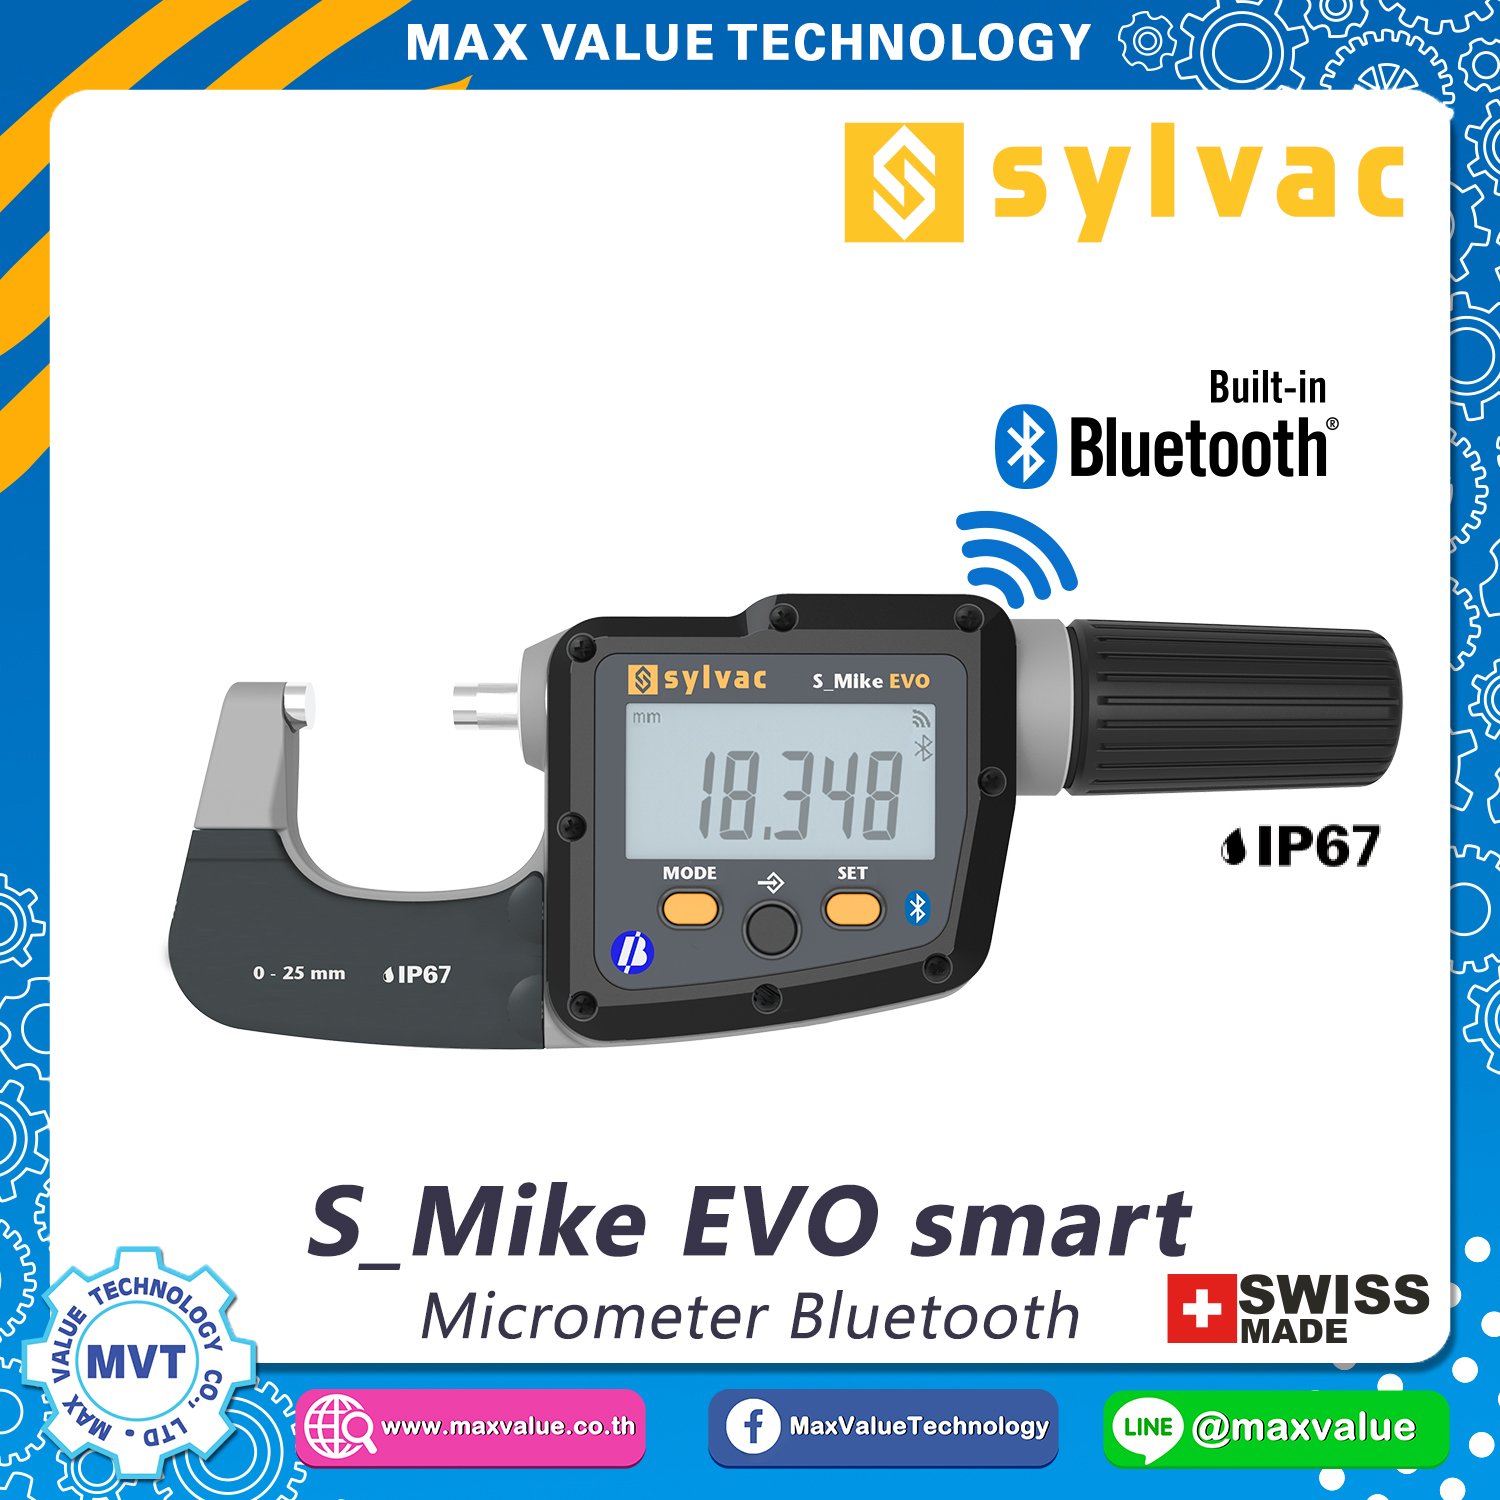 Micrometer S_Mike EVO Smart